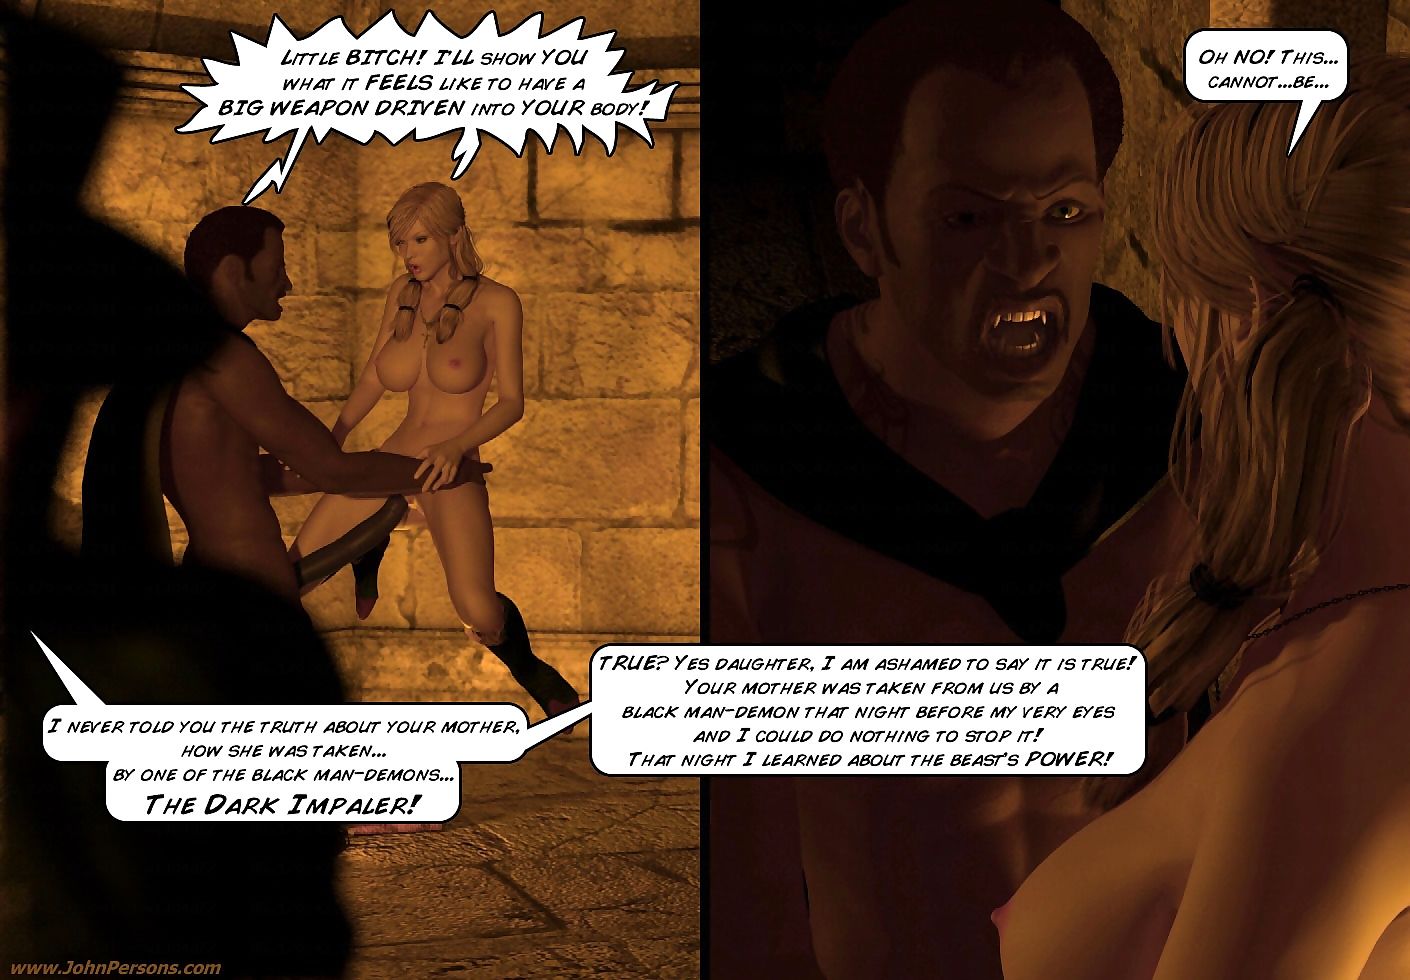 Vampier slayer John personen page 1